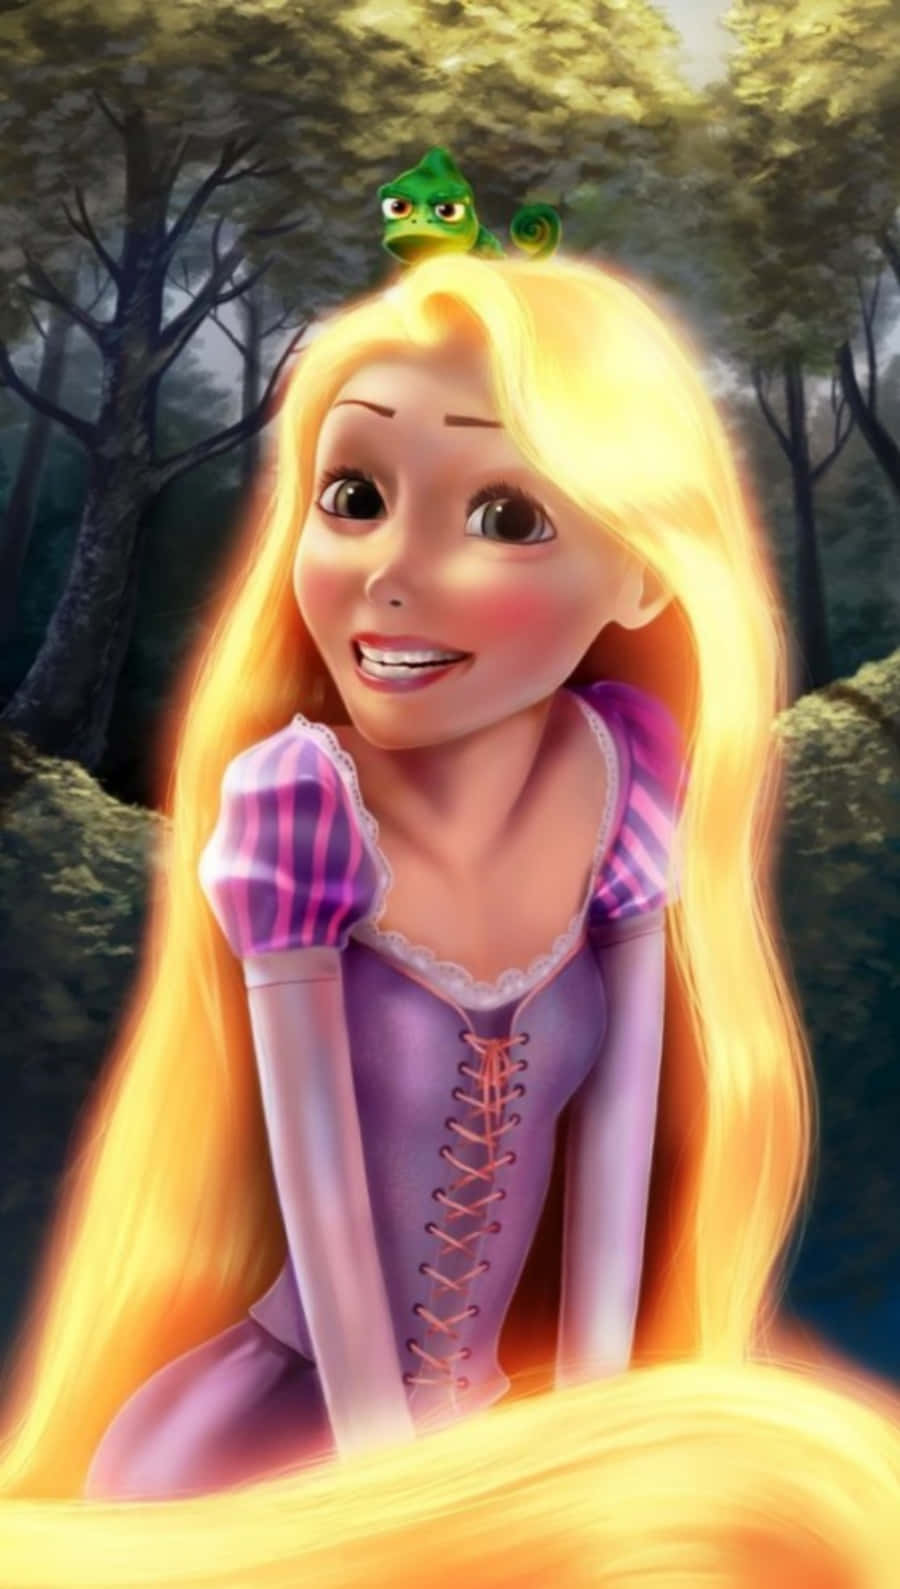 Rapunzel's Daydream - A Stunning Illustration Of The World's Favorite Fairytale Princess